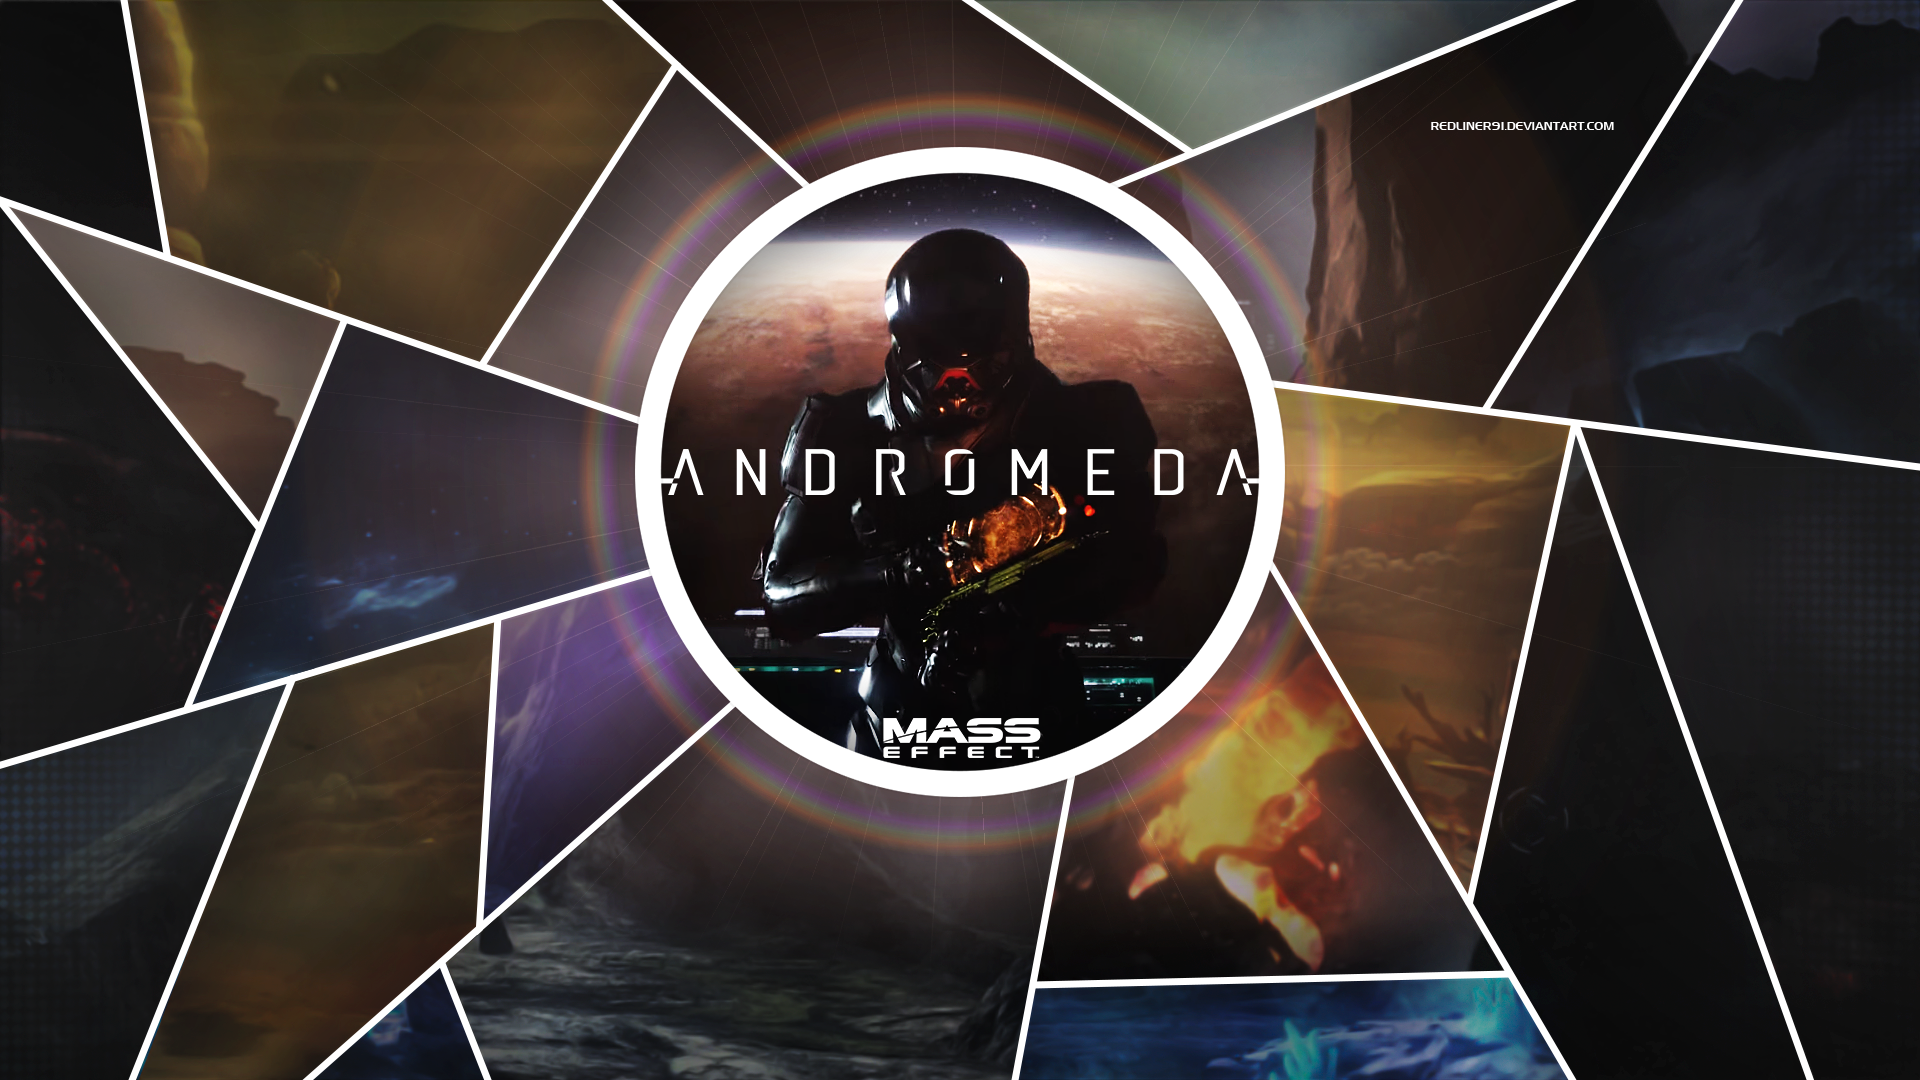 Mass Effect Andromeda Wallpaper By Redliner91